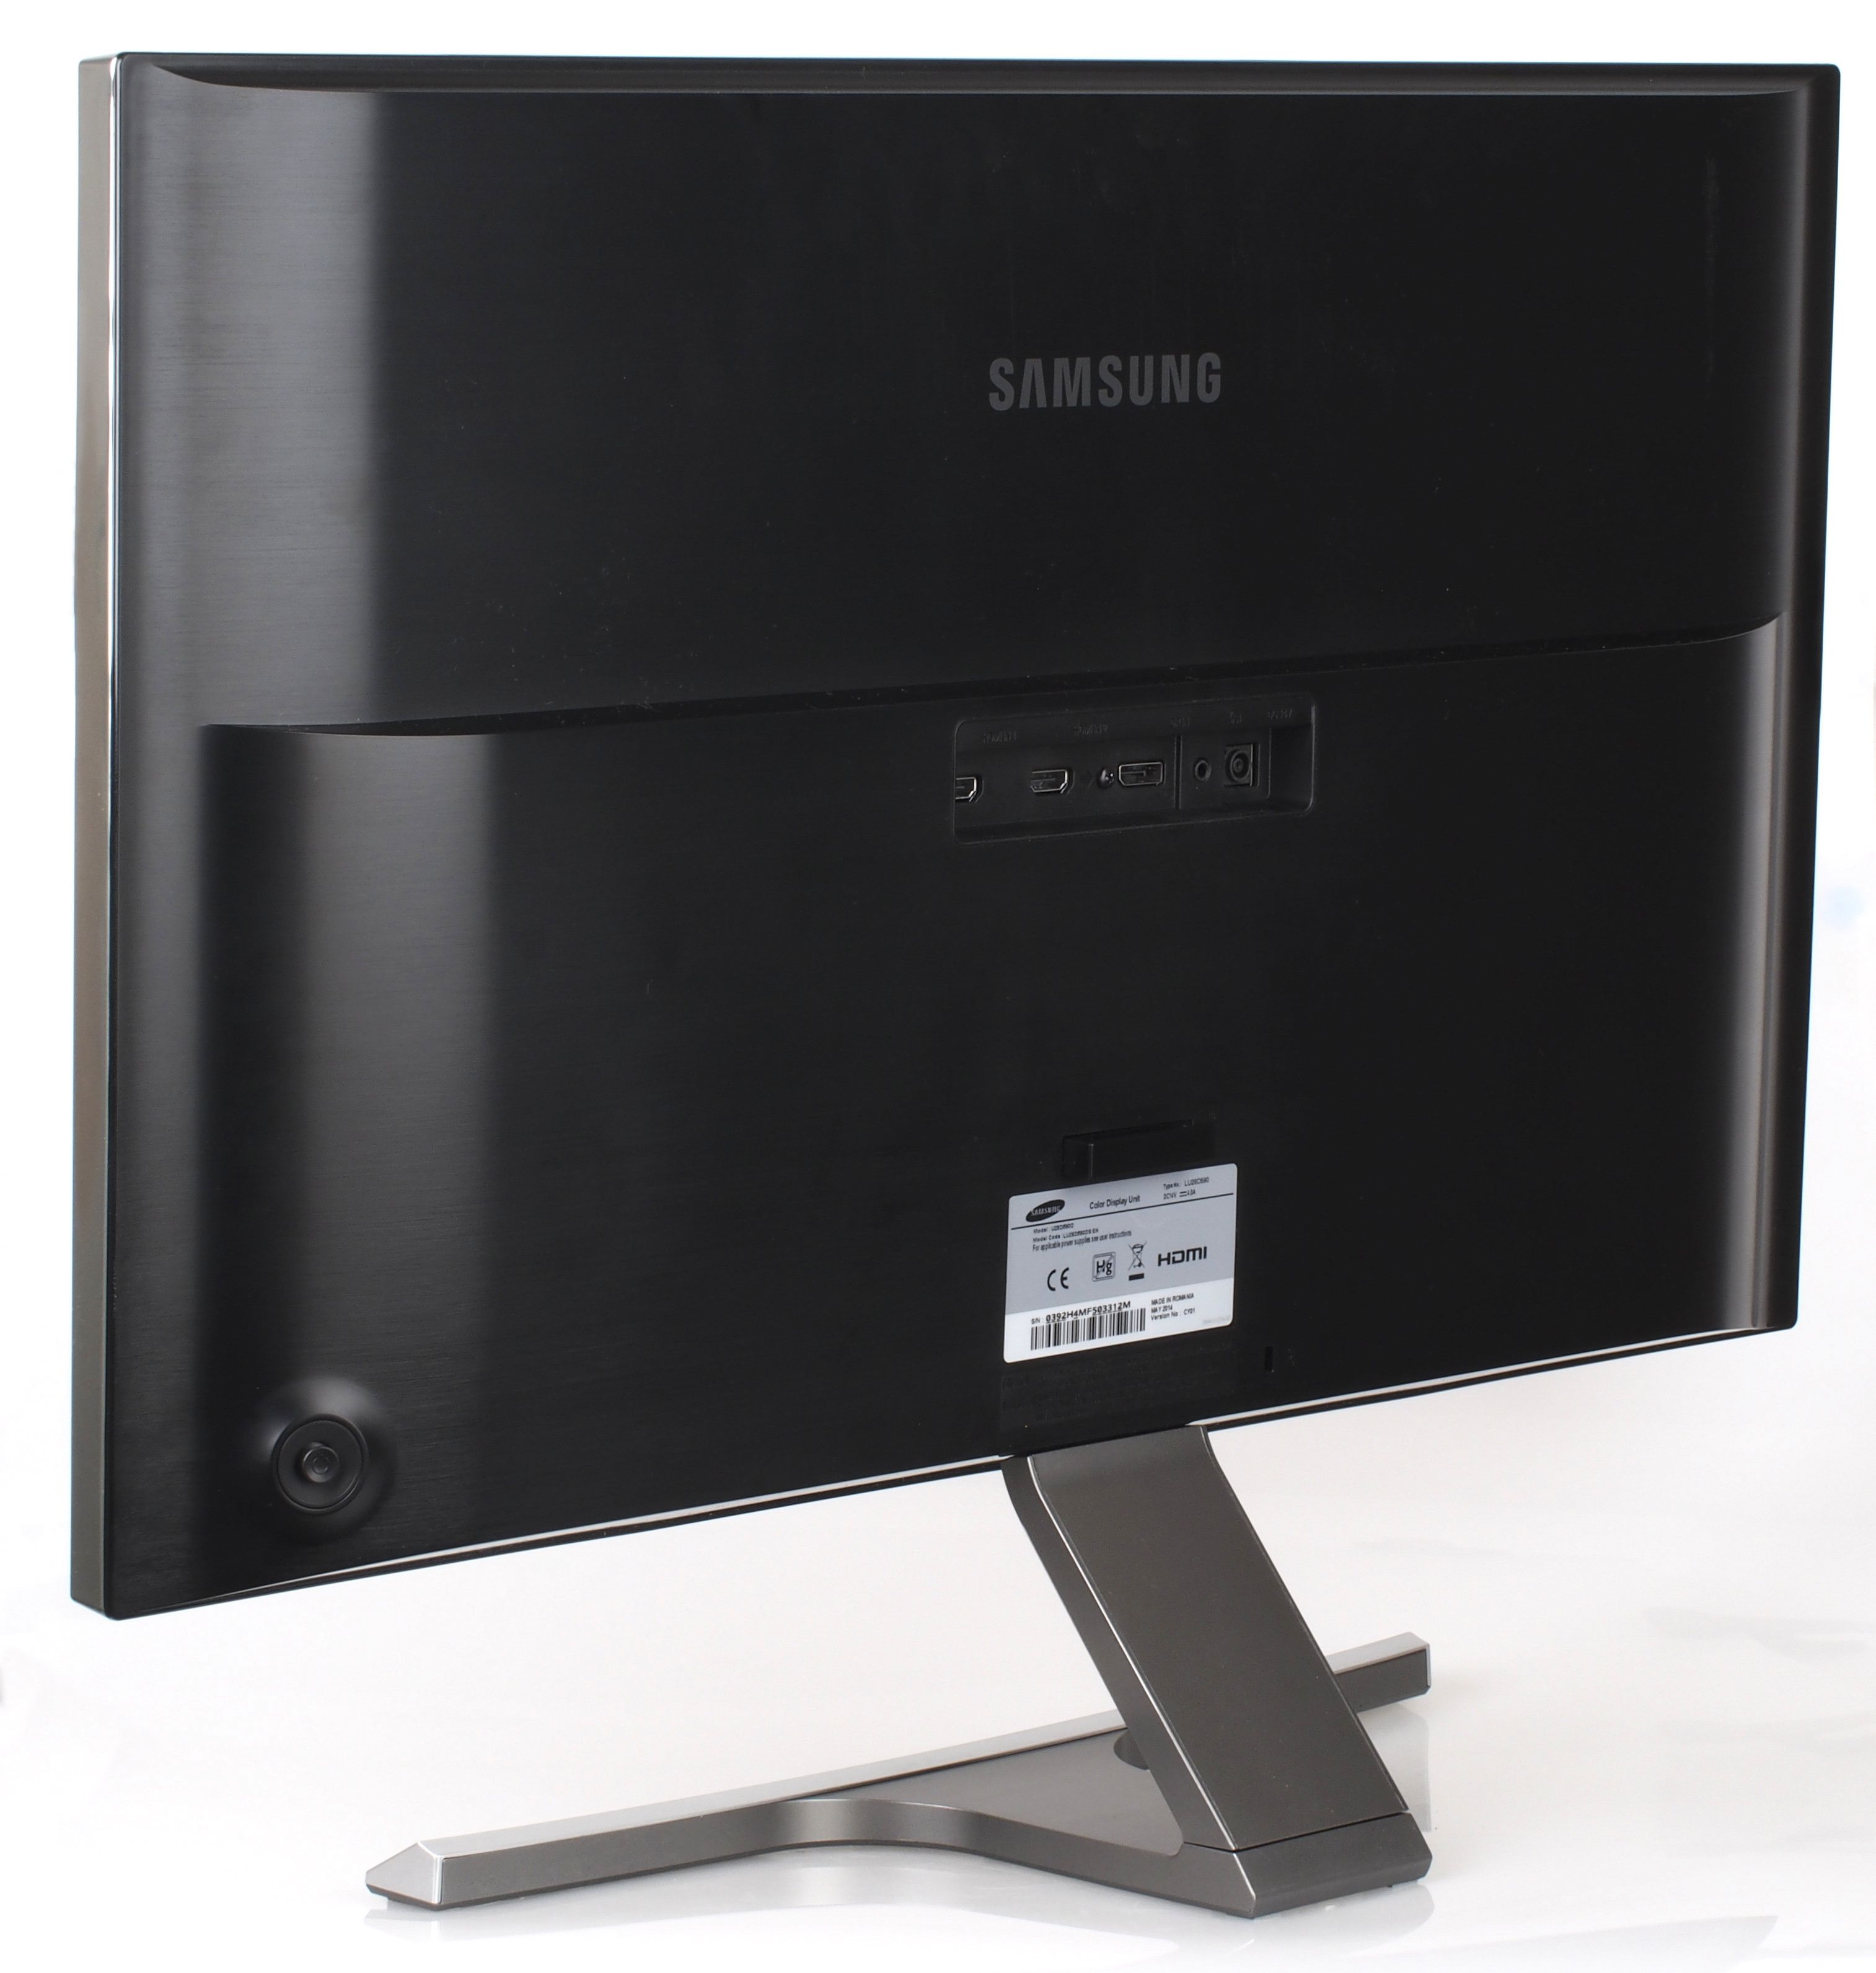 Highres Samsung U D590 Monitor 1 1412070543